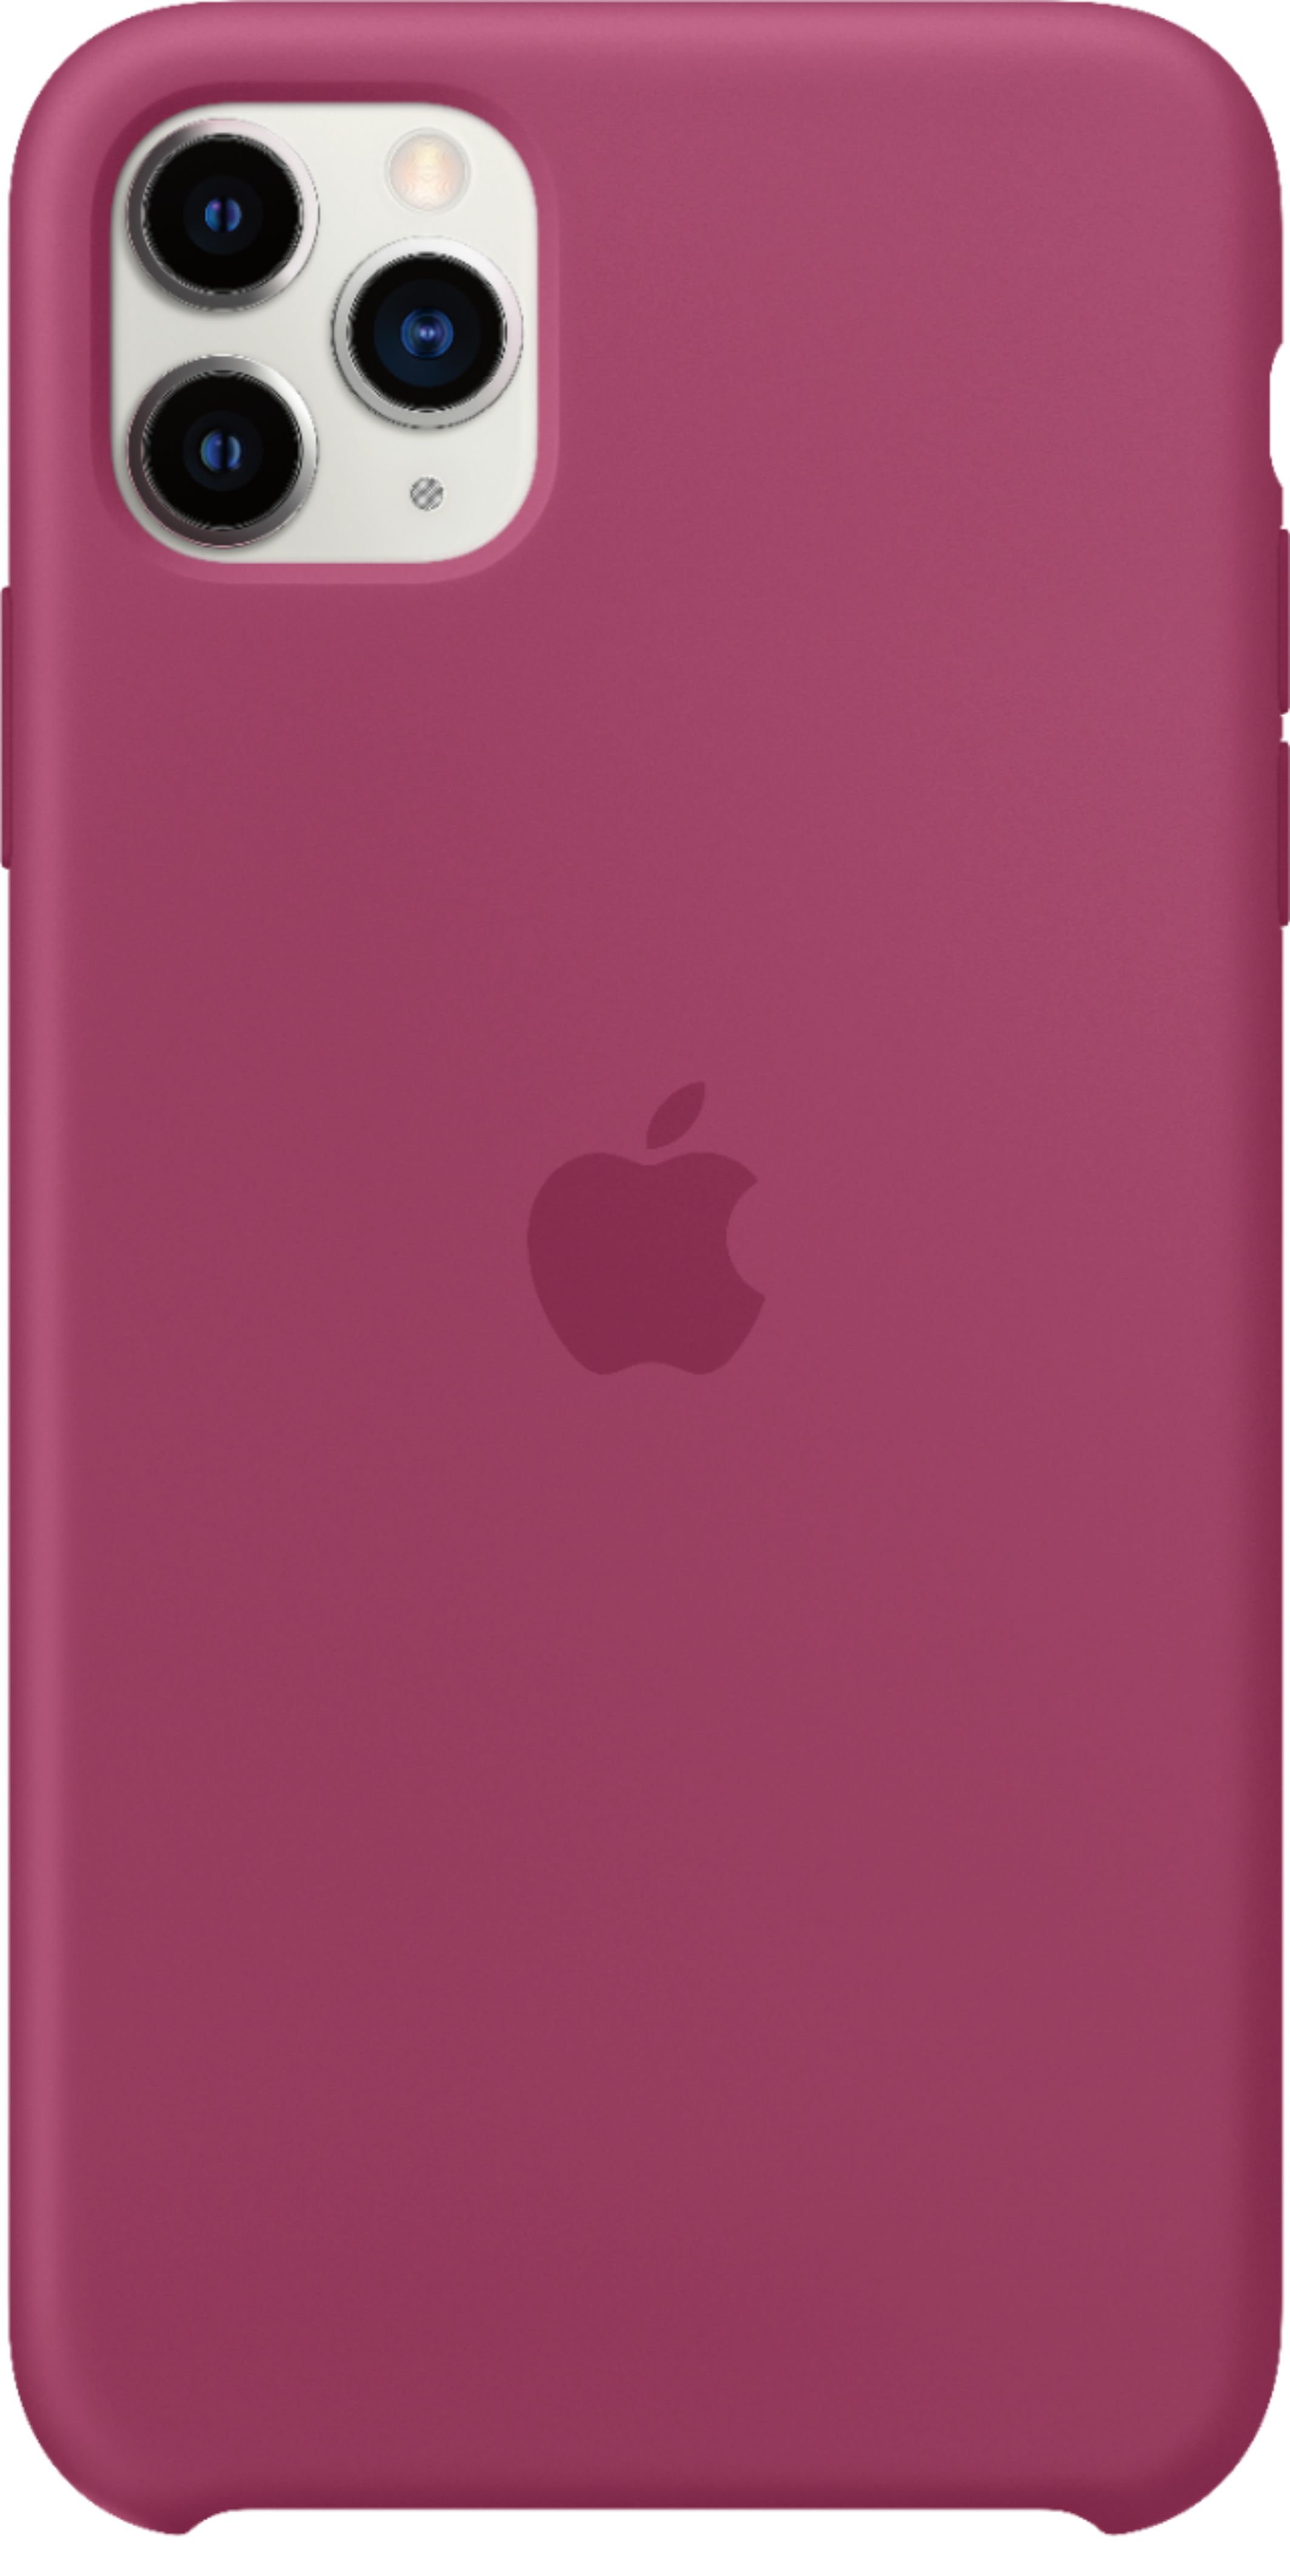 Funda Silicone Case iPhone 11 Pro Max